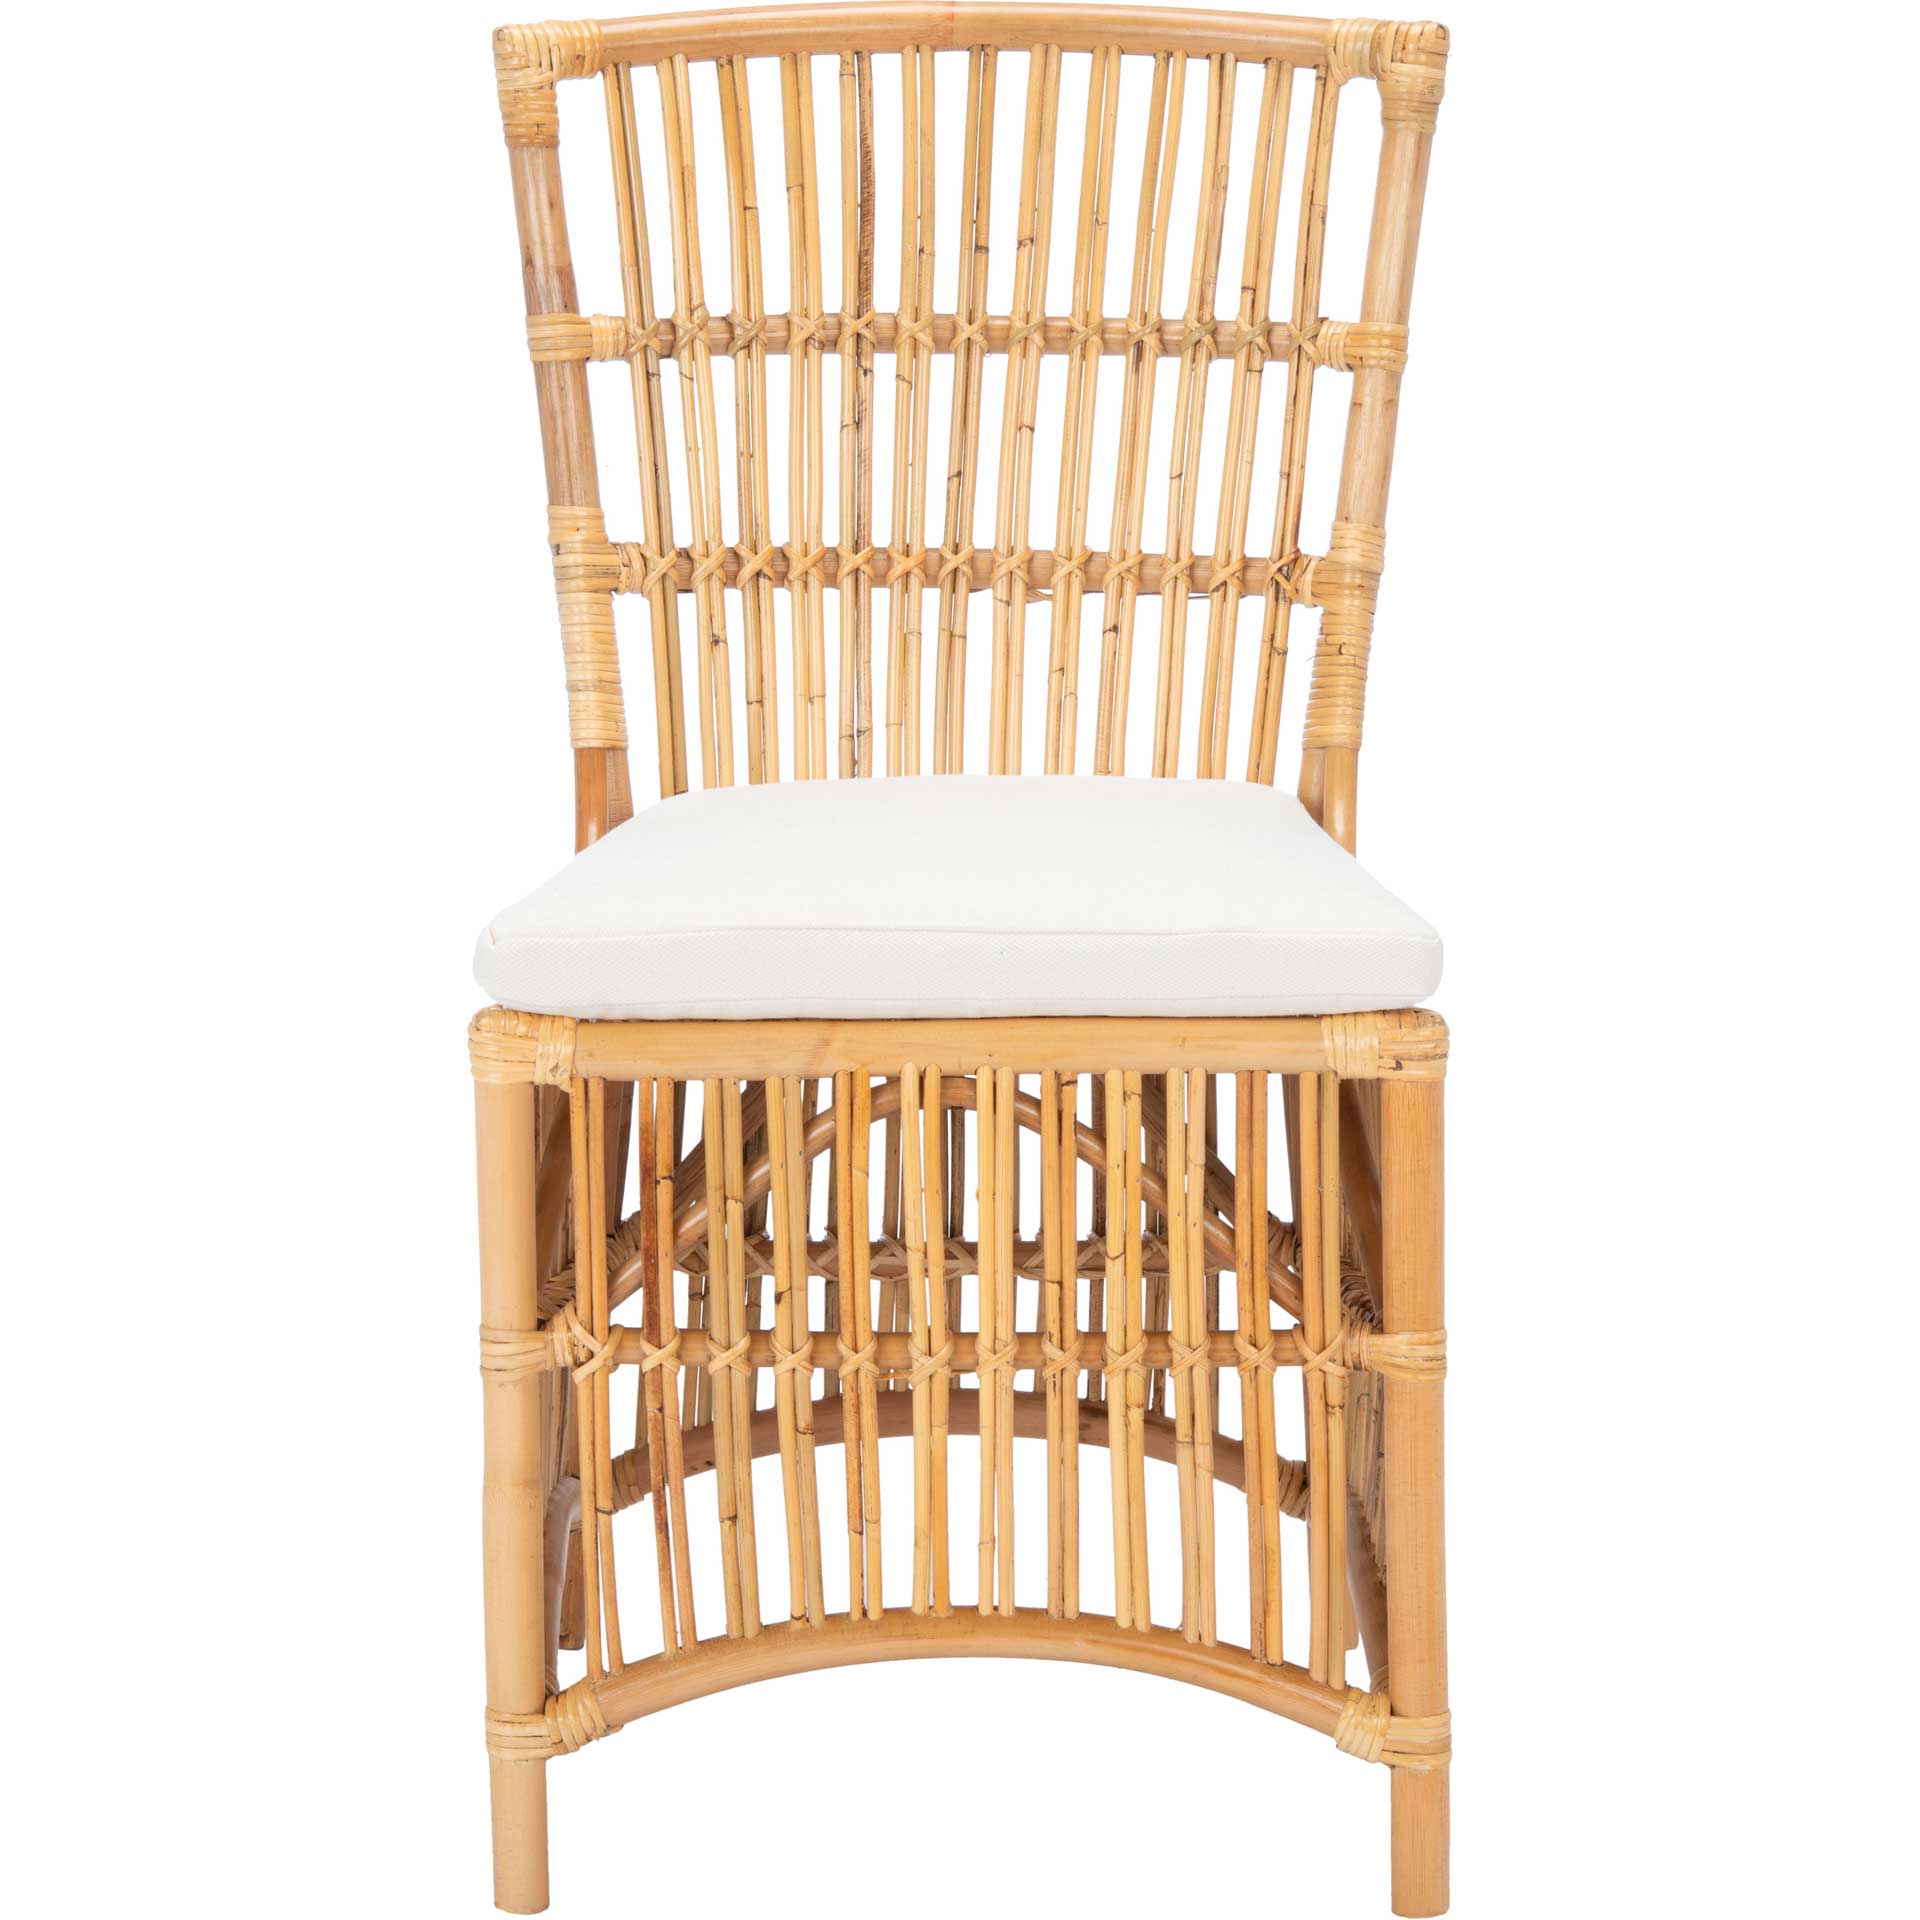 Erapel Rattan Accent Chair Natural/White (Set of 2)